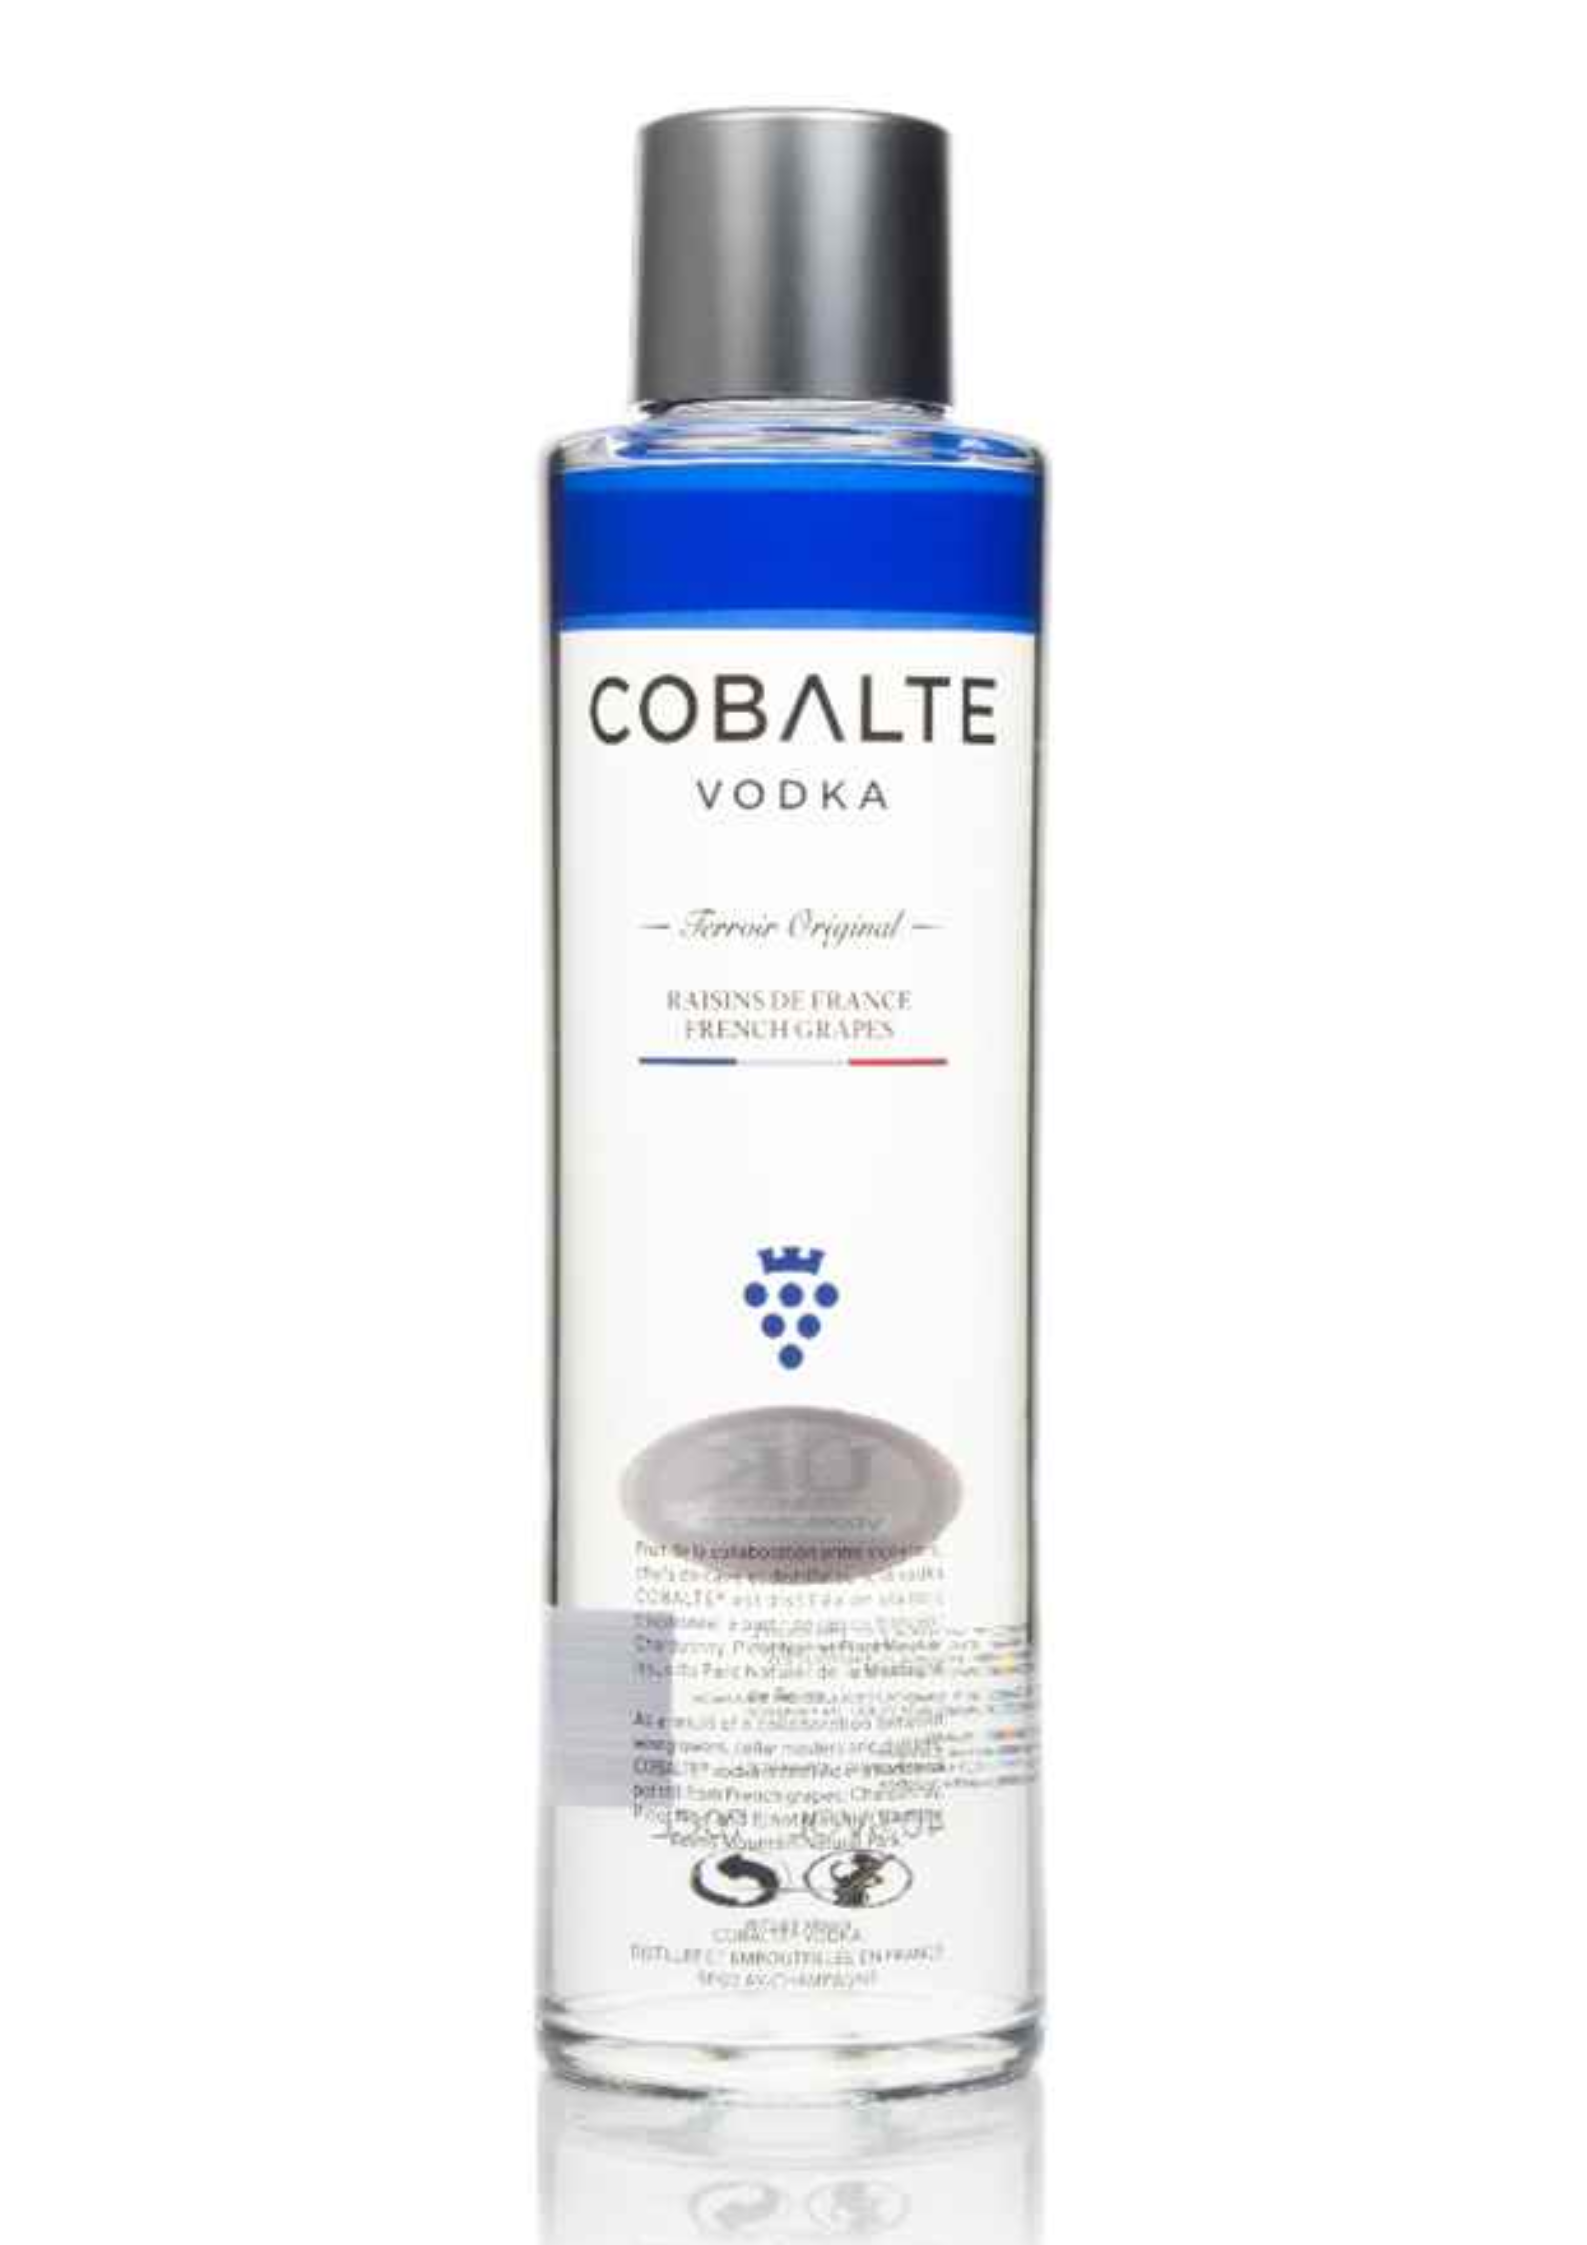 Bottle of Cobalte Vodka, 40% - The Spirits Room